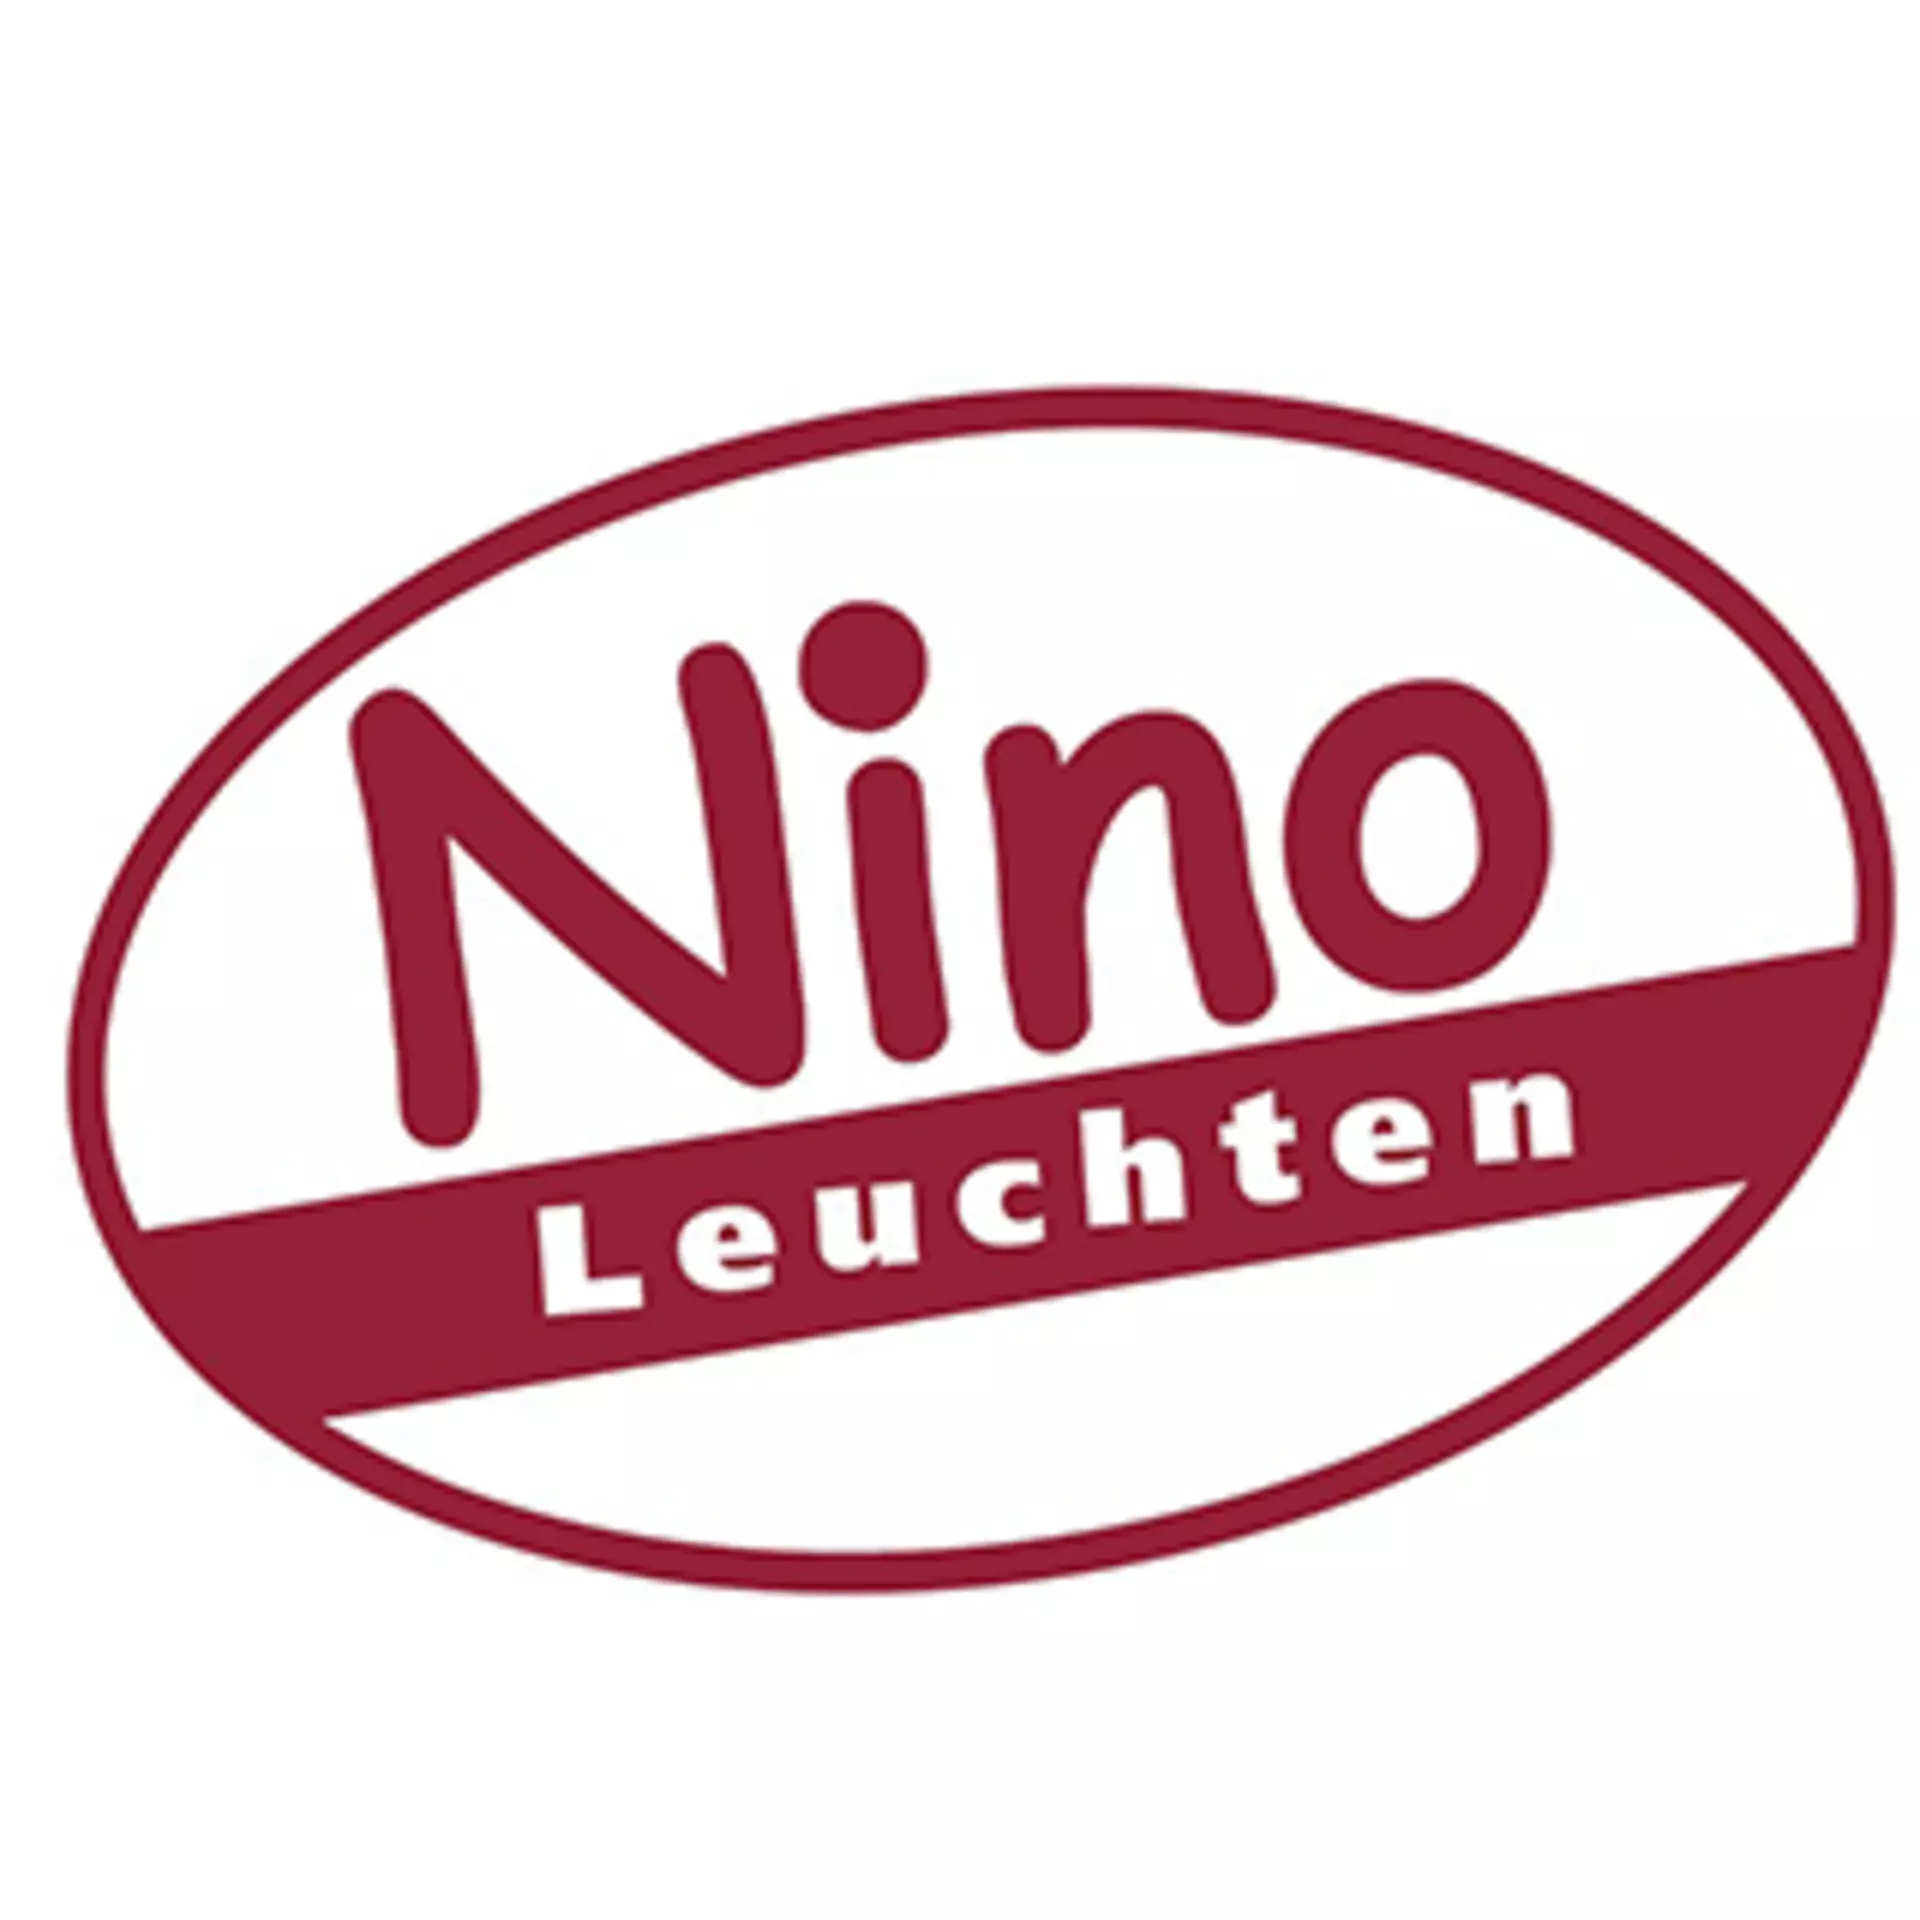 Nino-Leuchten Logo